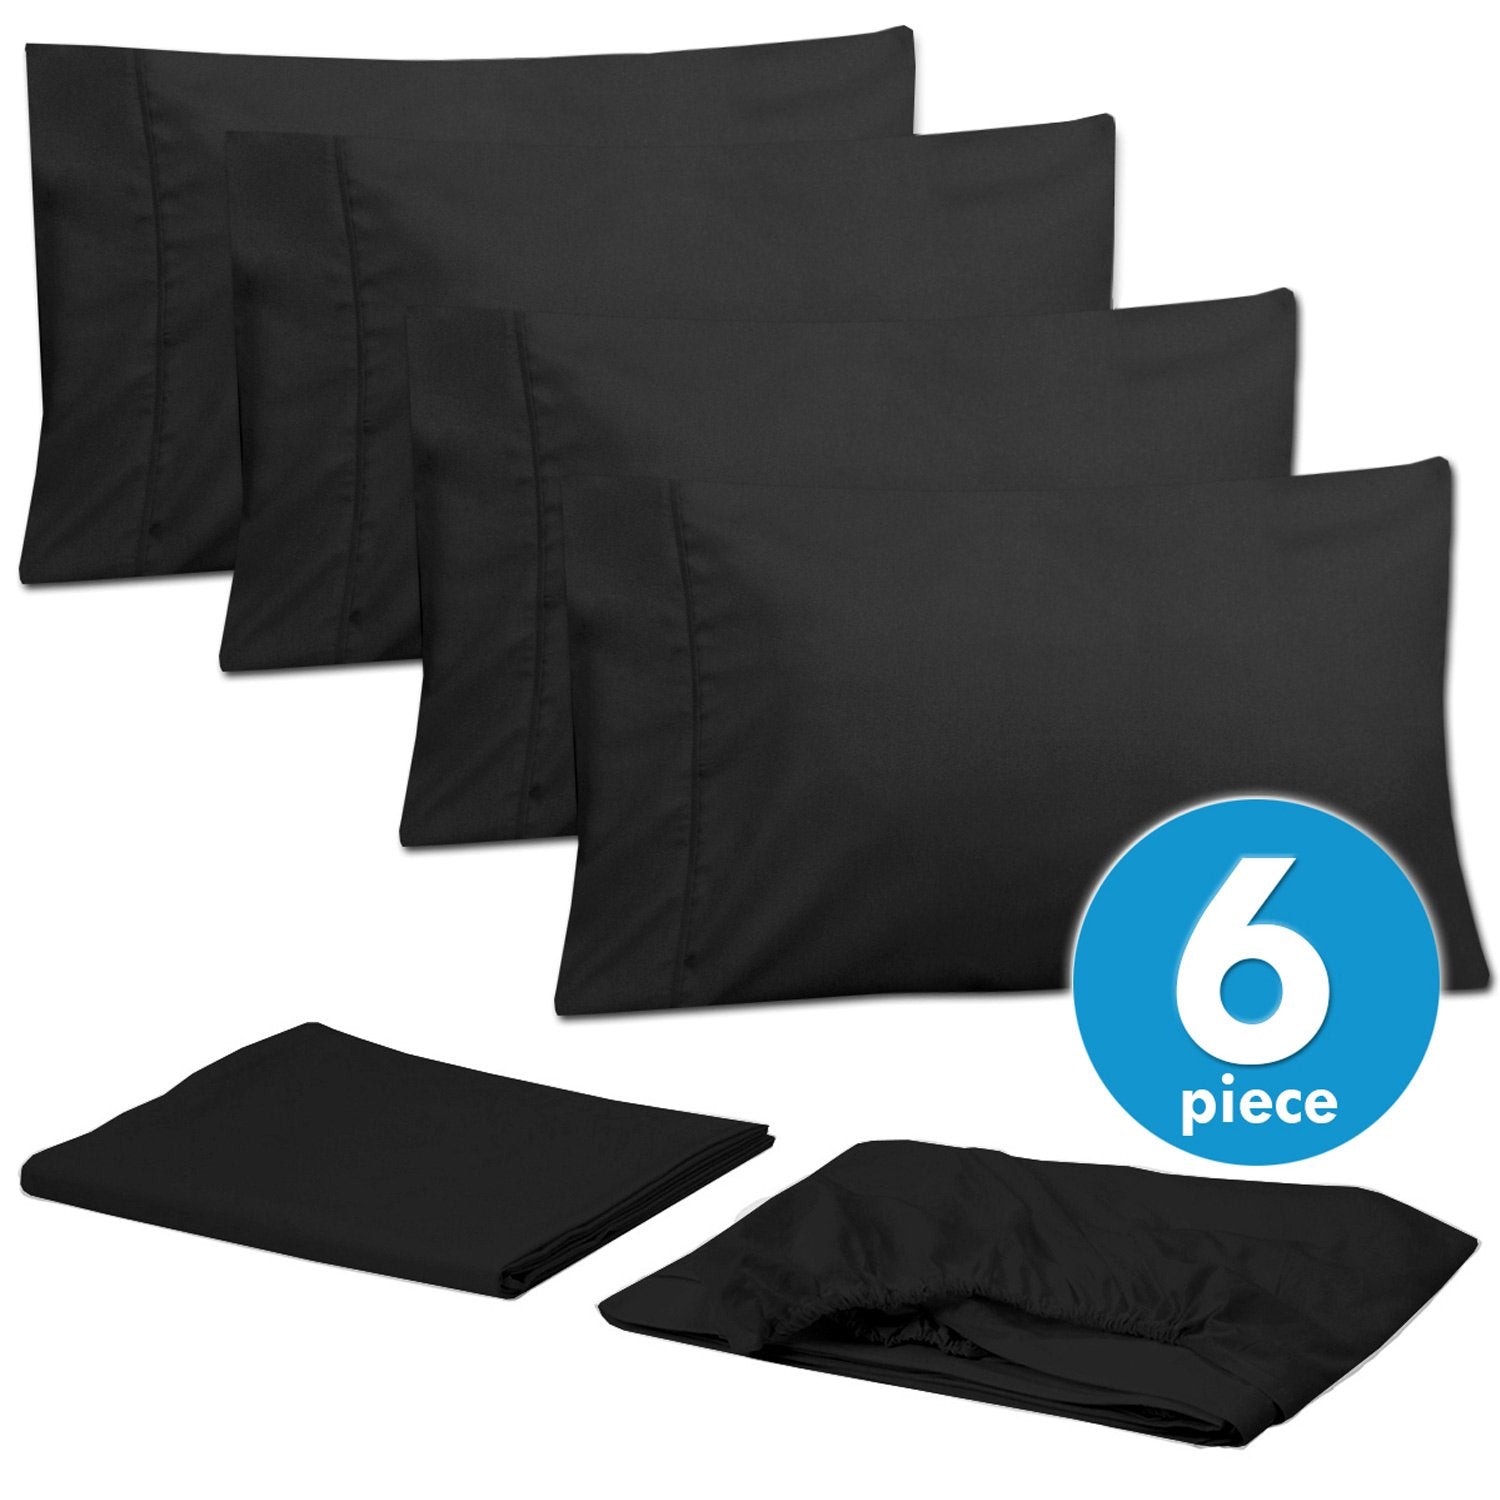 Deluxe 6-Piece Bed Sheet Set (Black) - Set